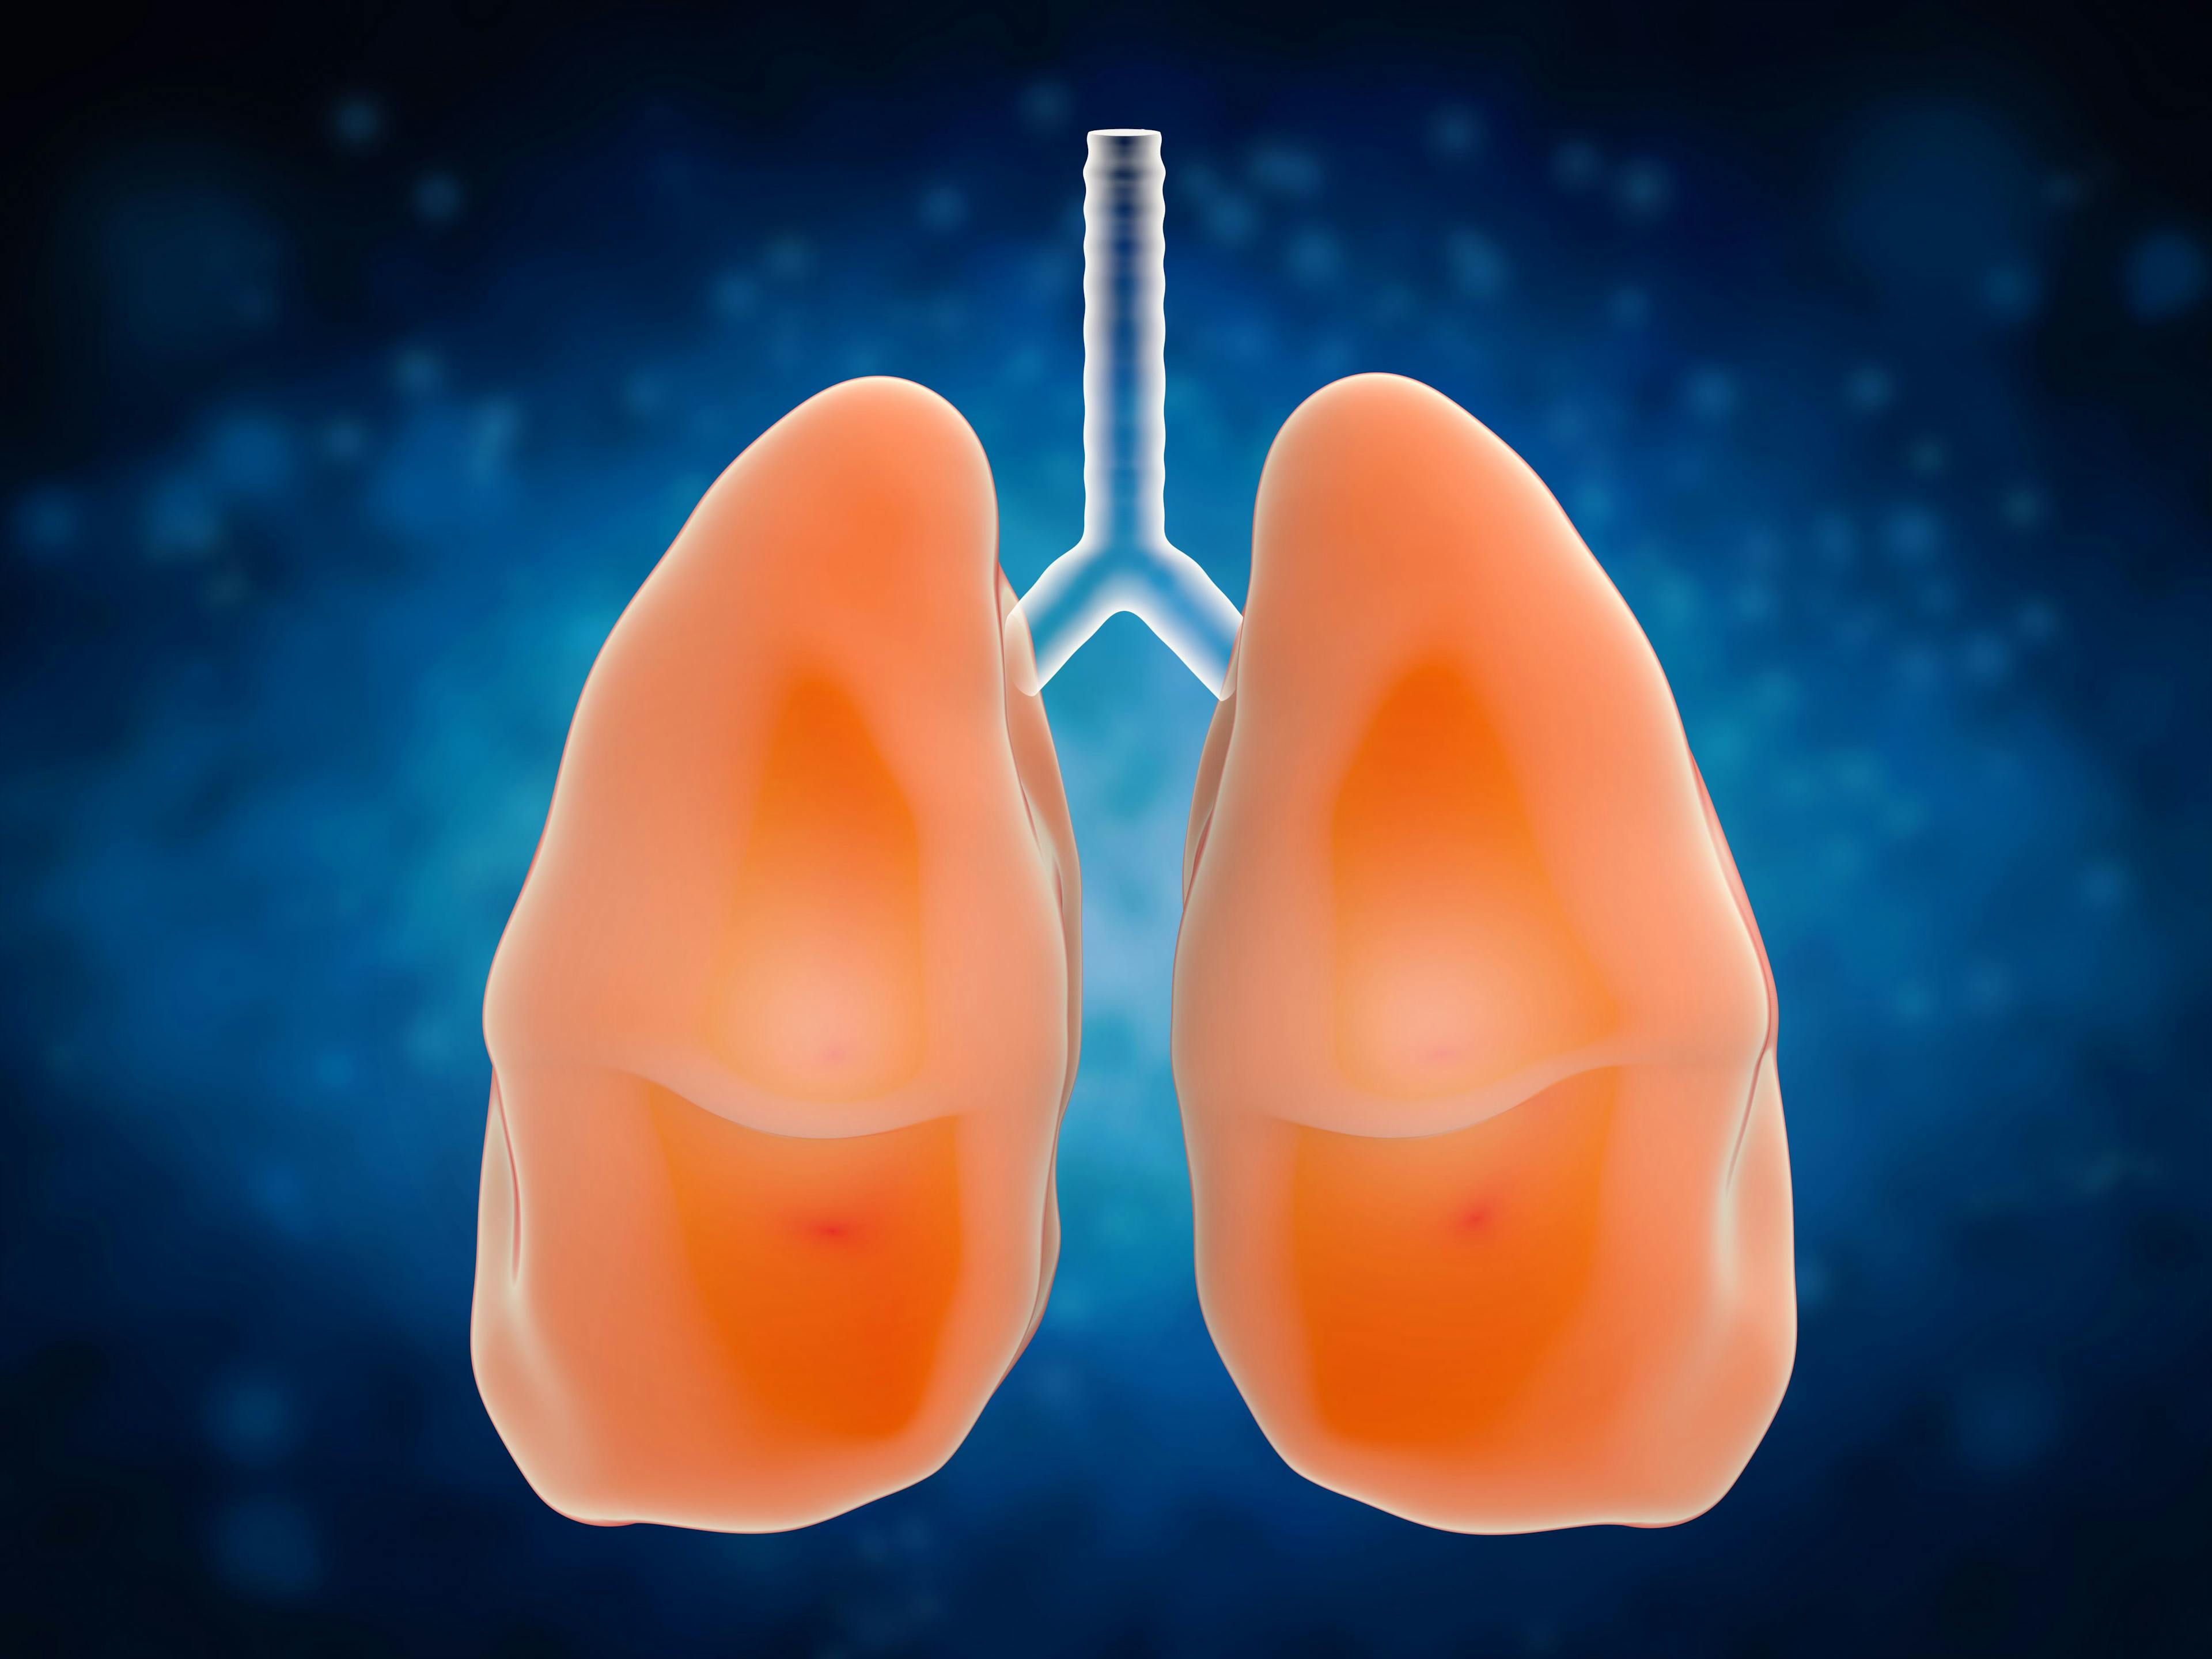 Trial of Plinabulin, Keytruda, Docetaxel Kicks Off in Lung Cancer